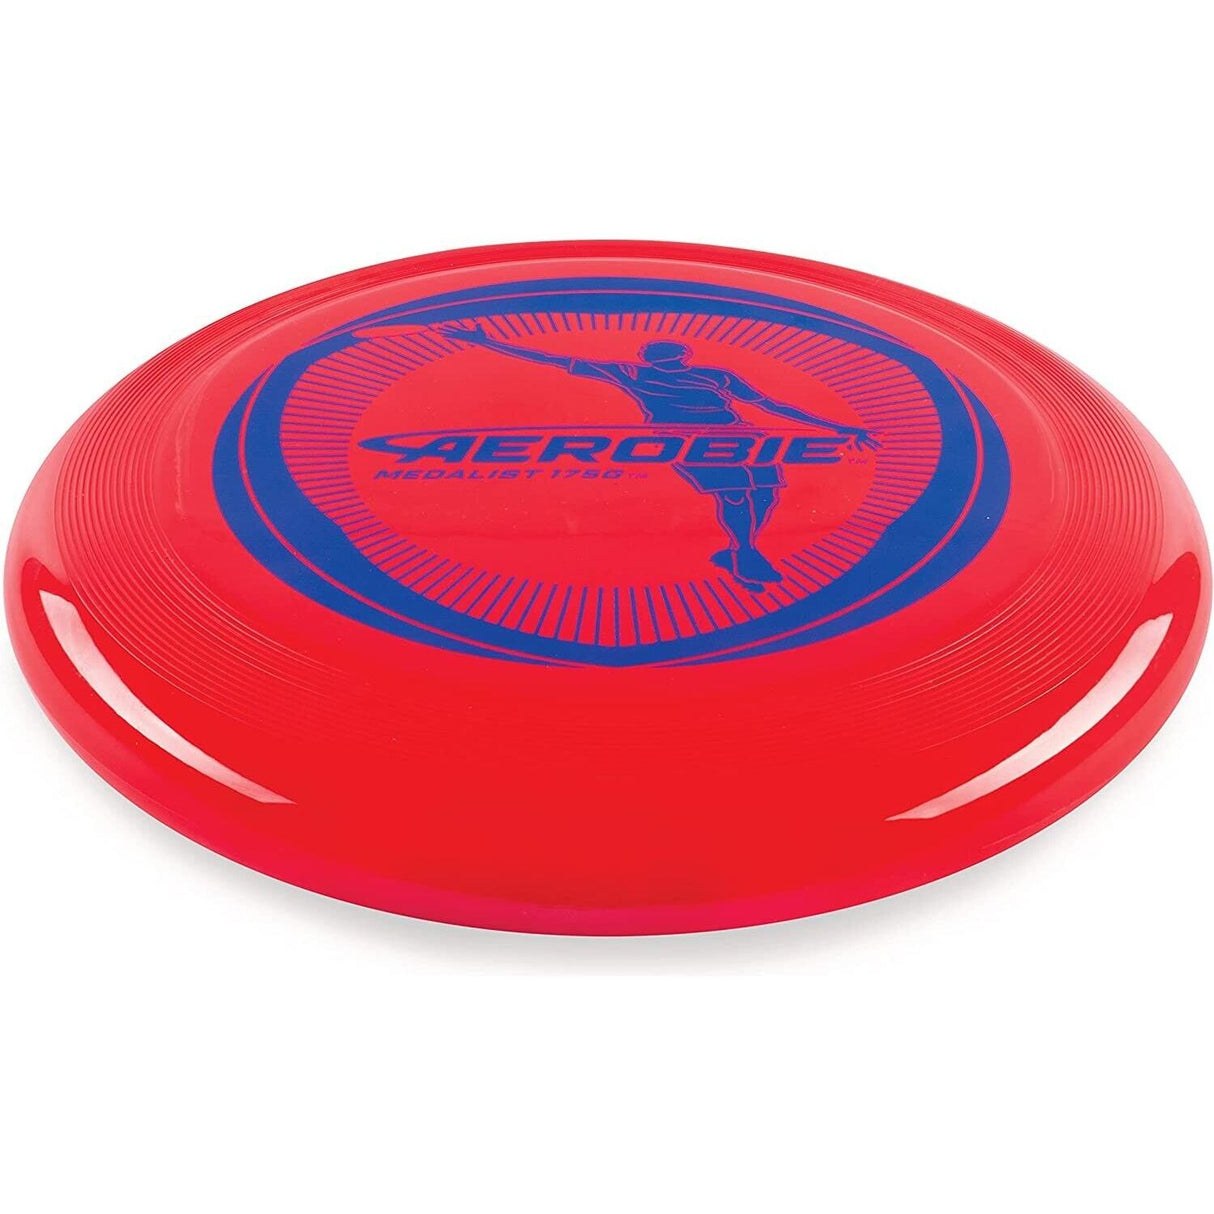 Aerobie Medalist Frisbee Disc - Red